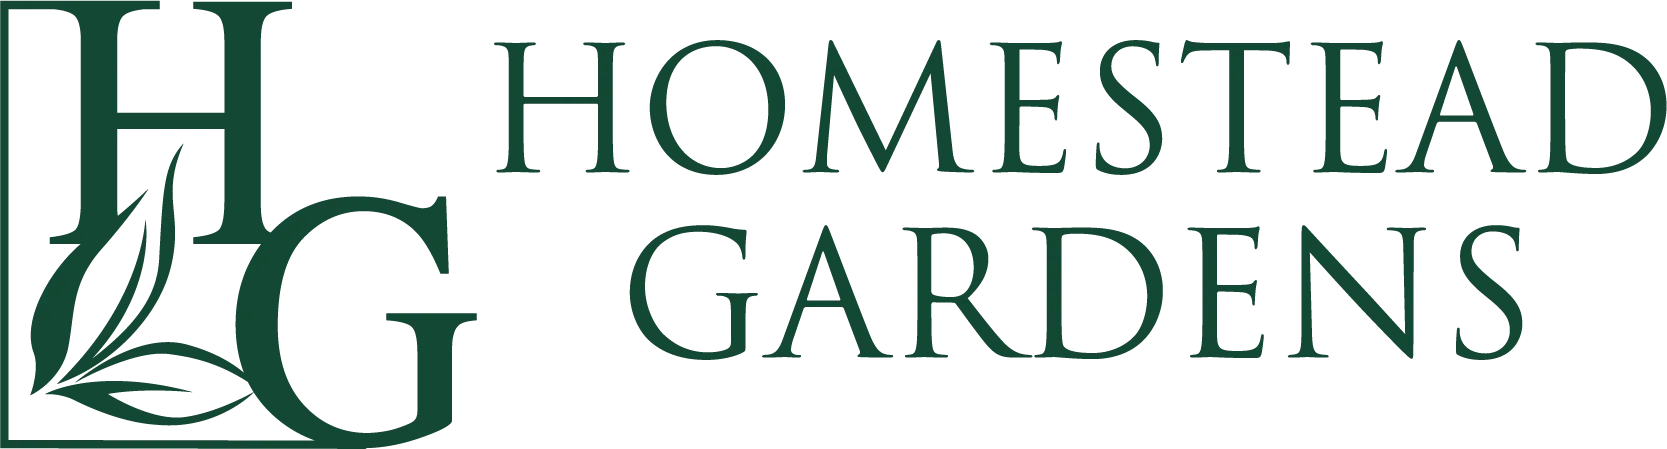 Homestead Gardens